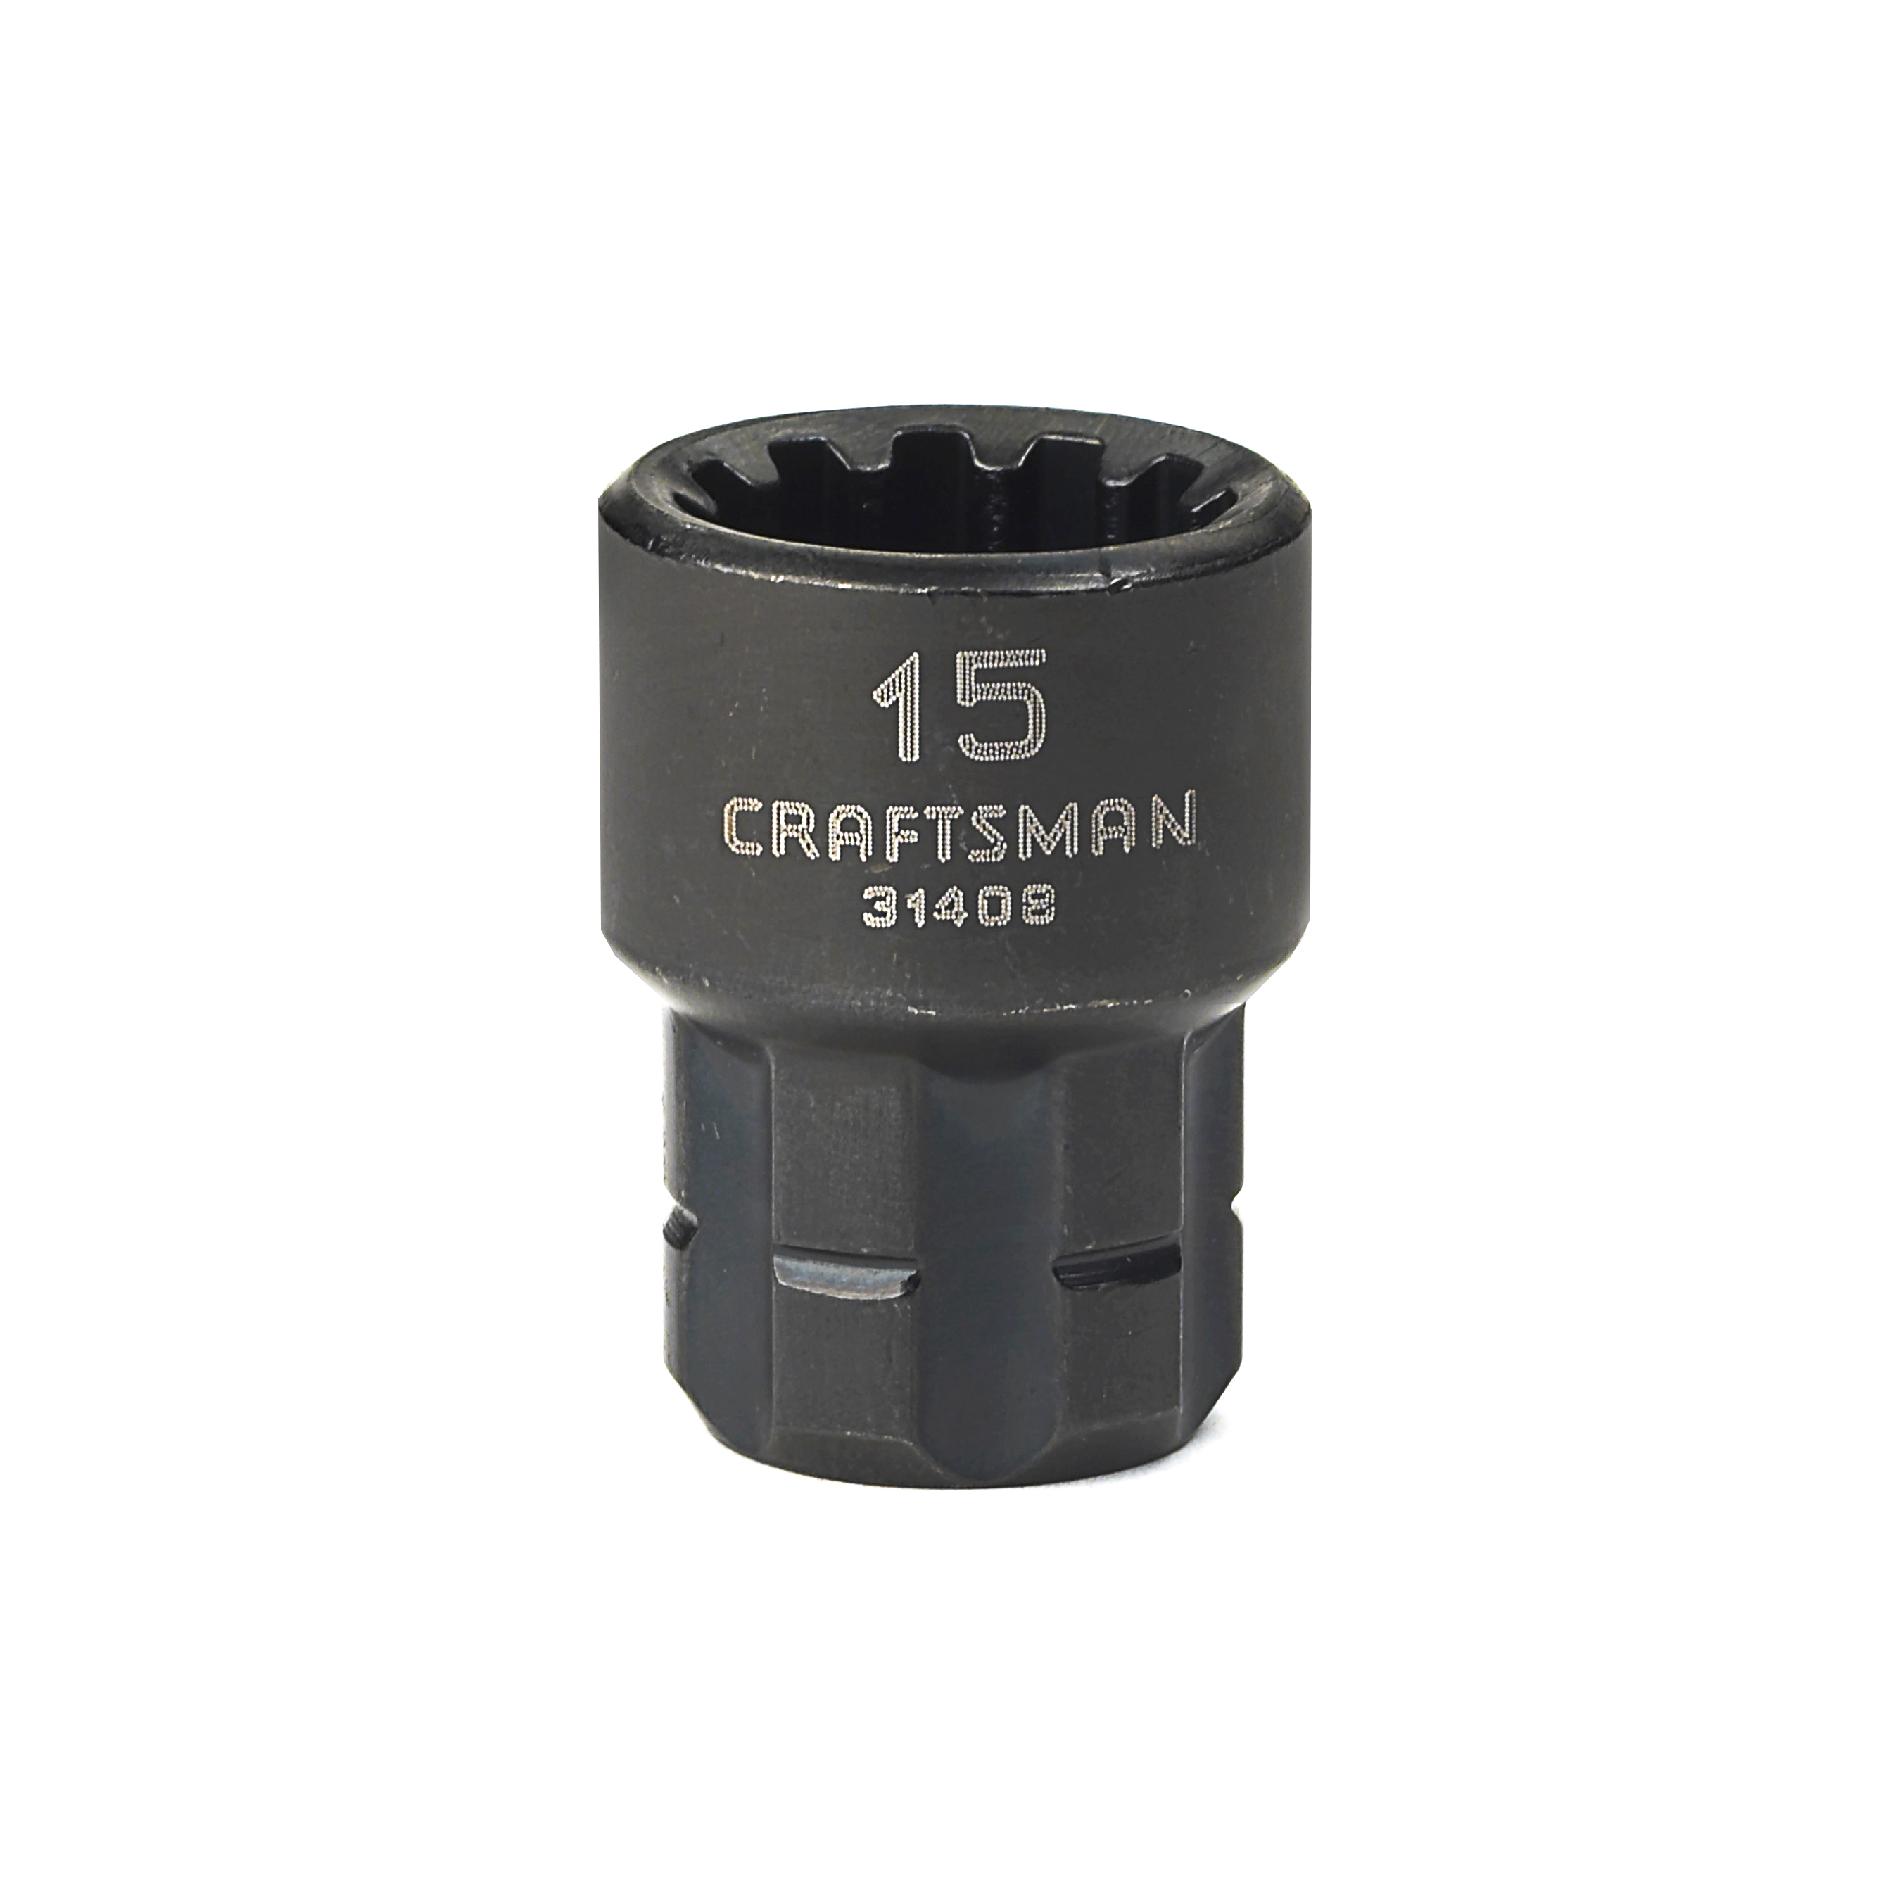 Craftsman 15 mm Universal Max Axess Socket,  3/8-Inch Drive